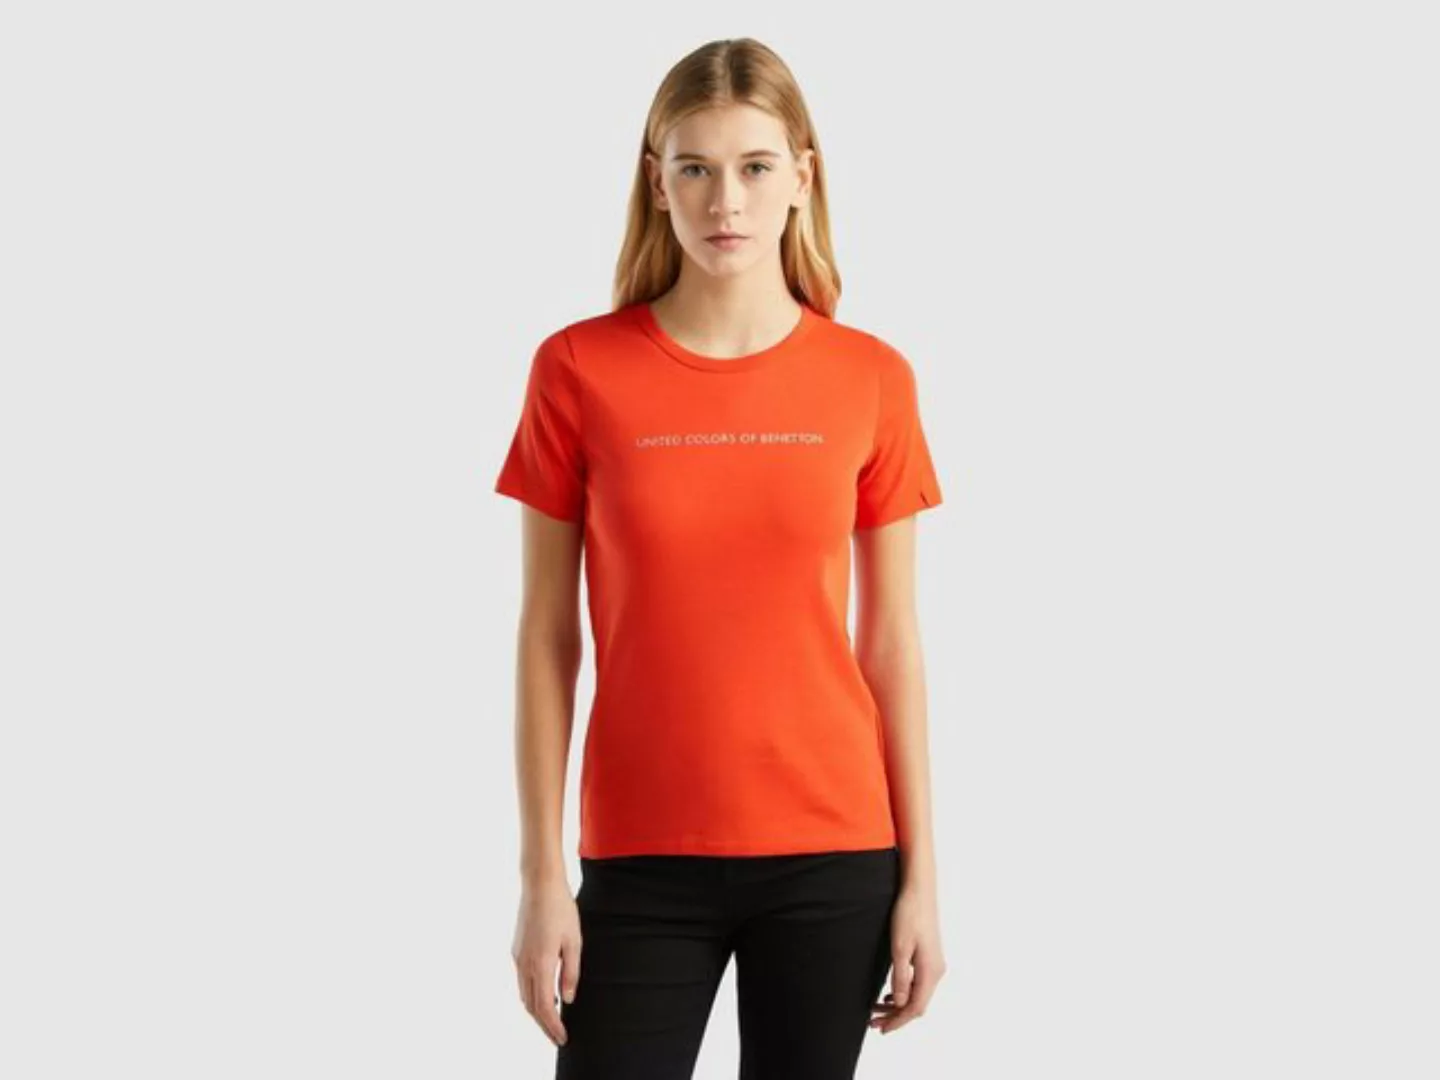 United Colors of Benetton T-Shirt günstig online kaufen